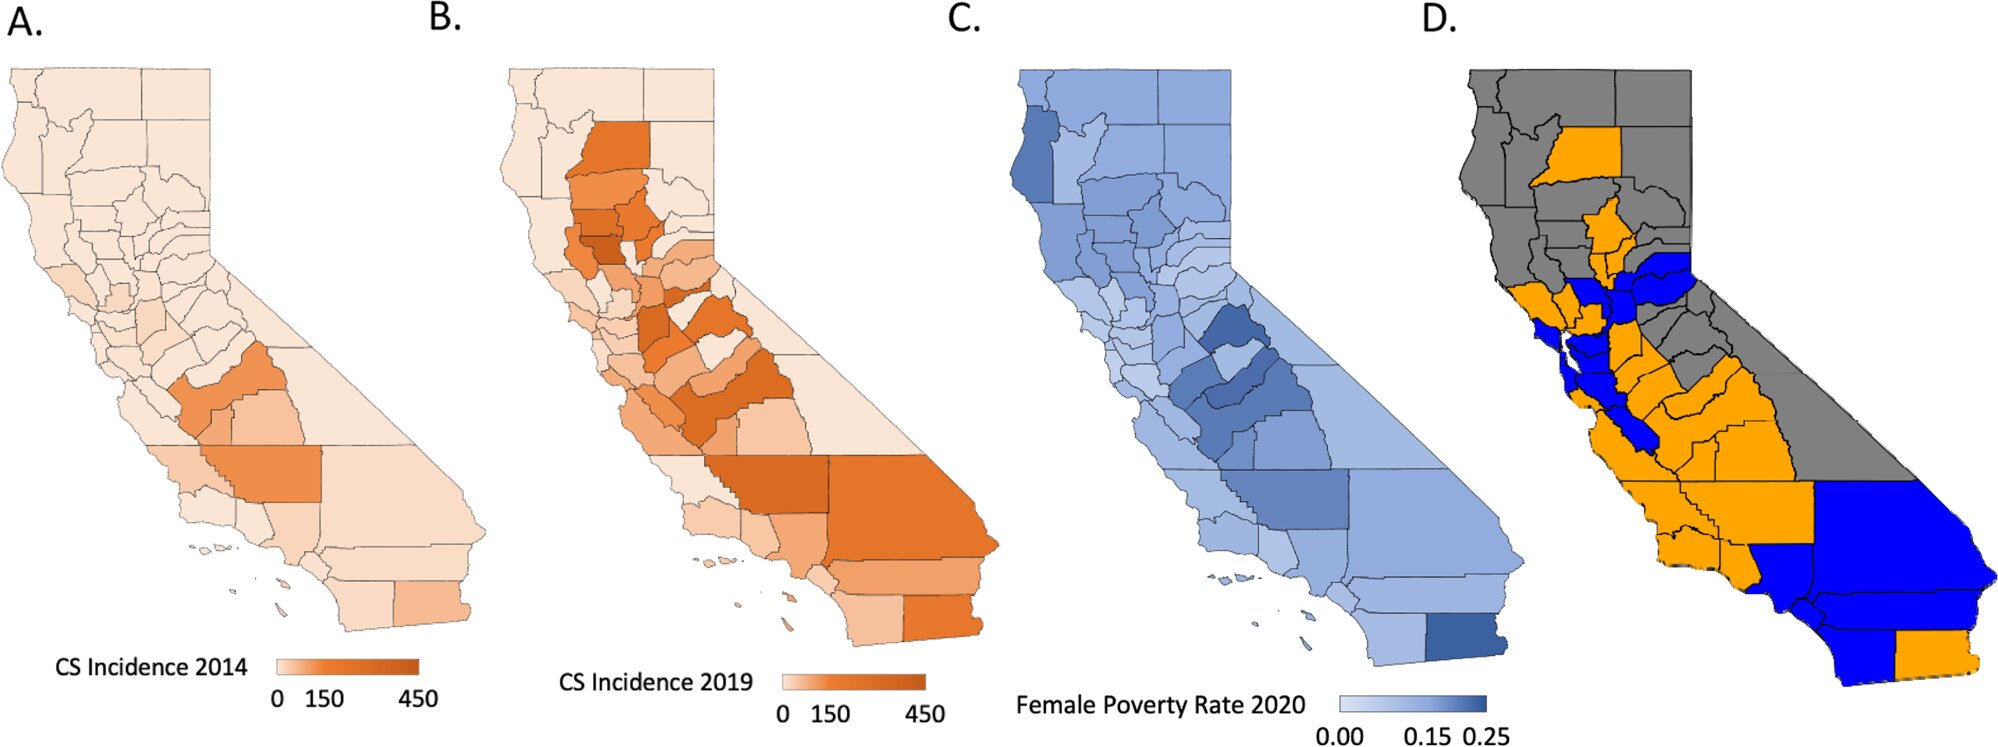 #Congenital syphilis linked to socioeconomic factors in small/medium California counties